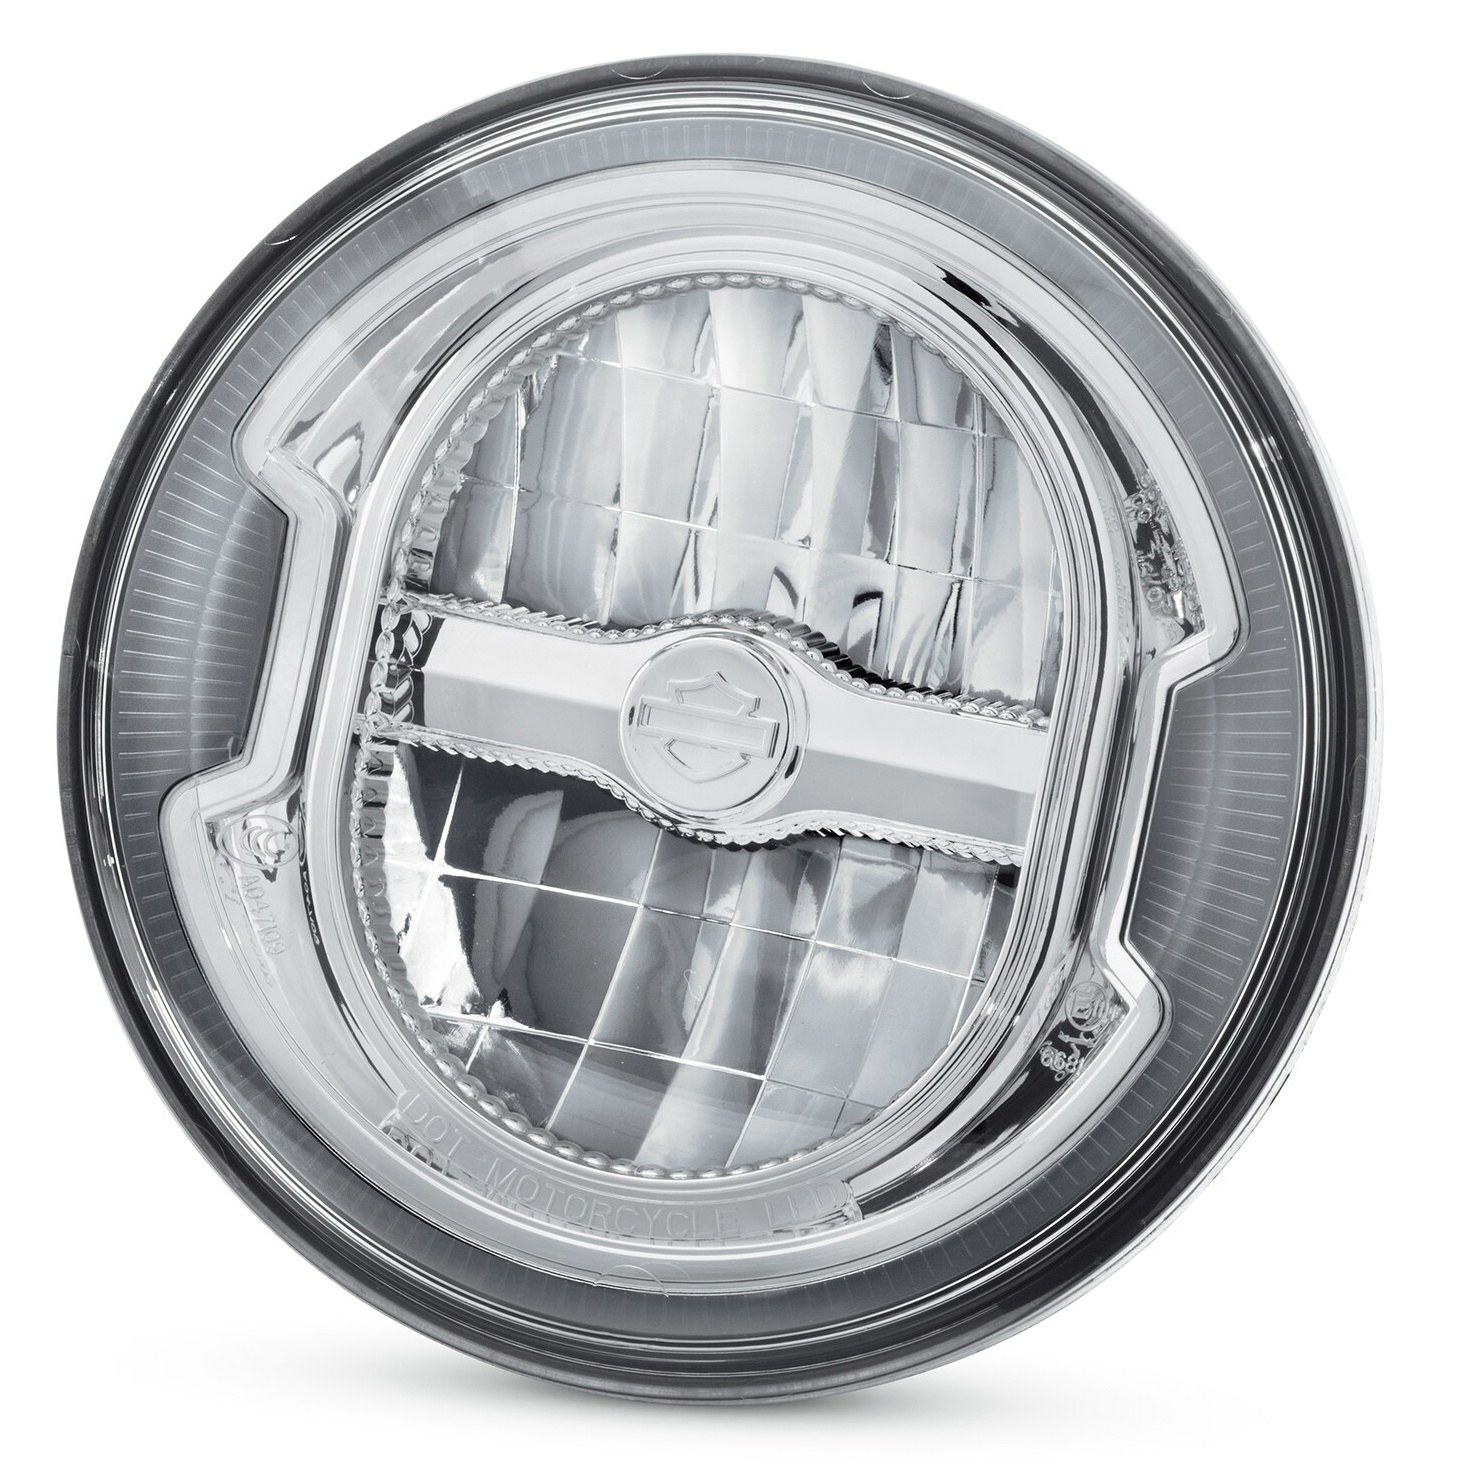 LED Scheinwerfer 5,75 Zoll kompatibel mit Harley Davidson